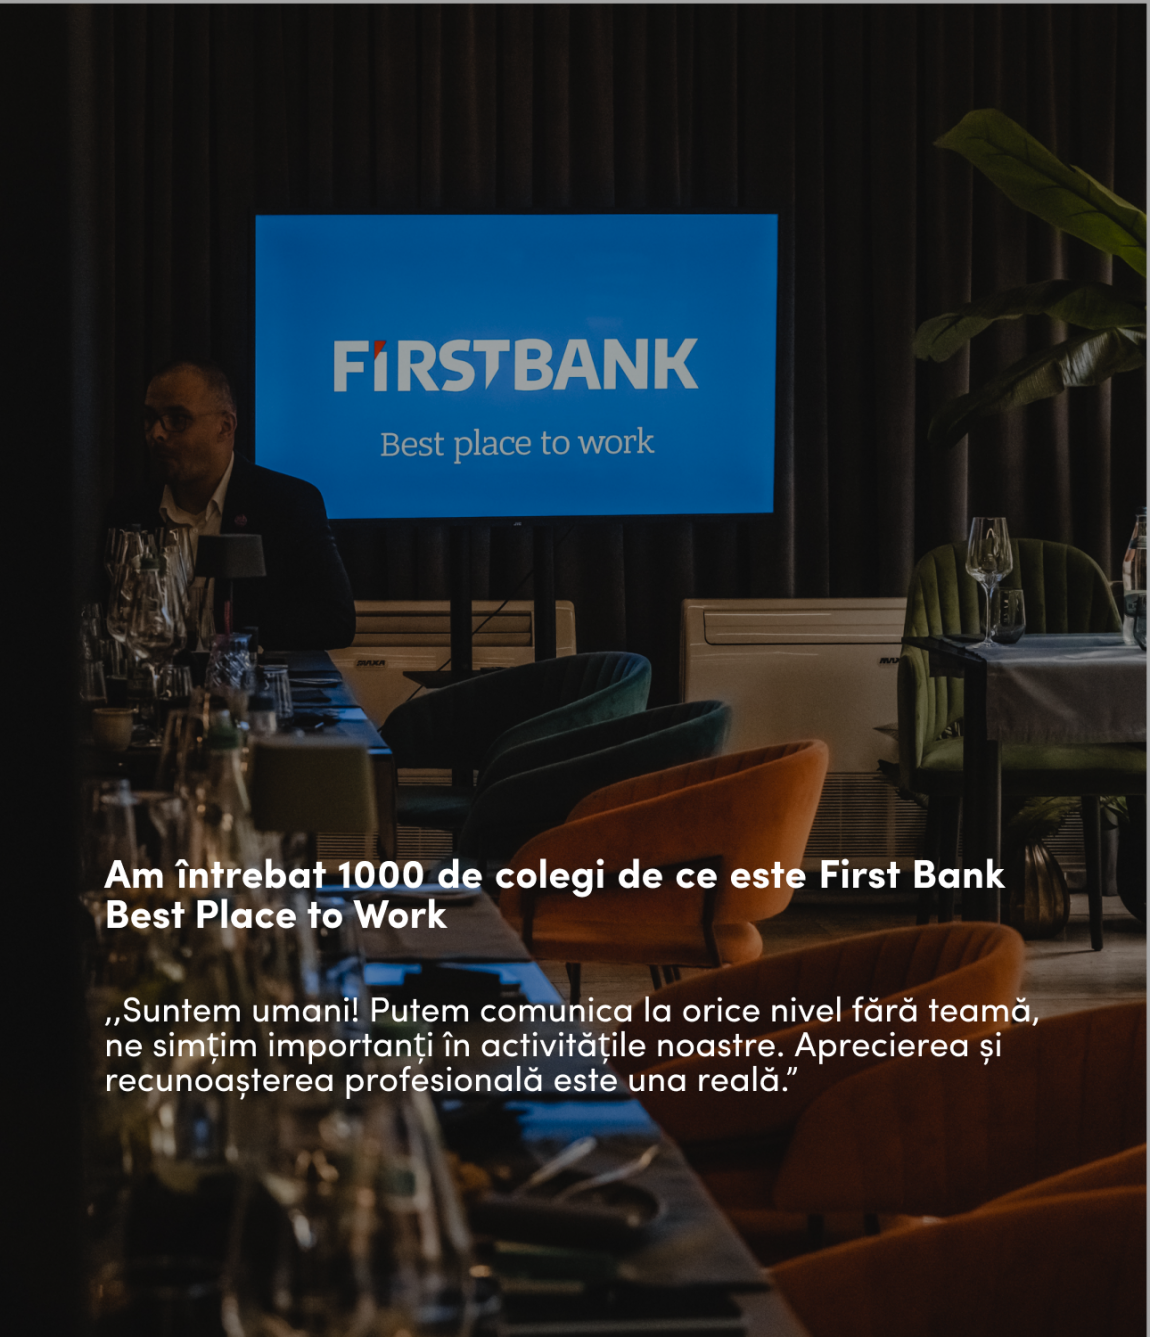  First Bank